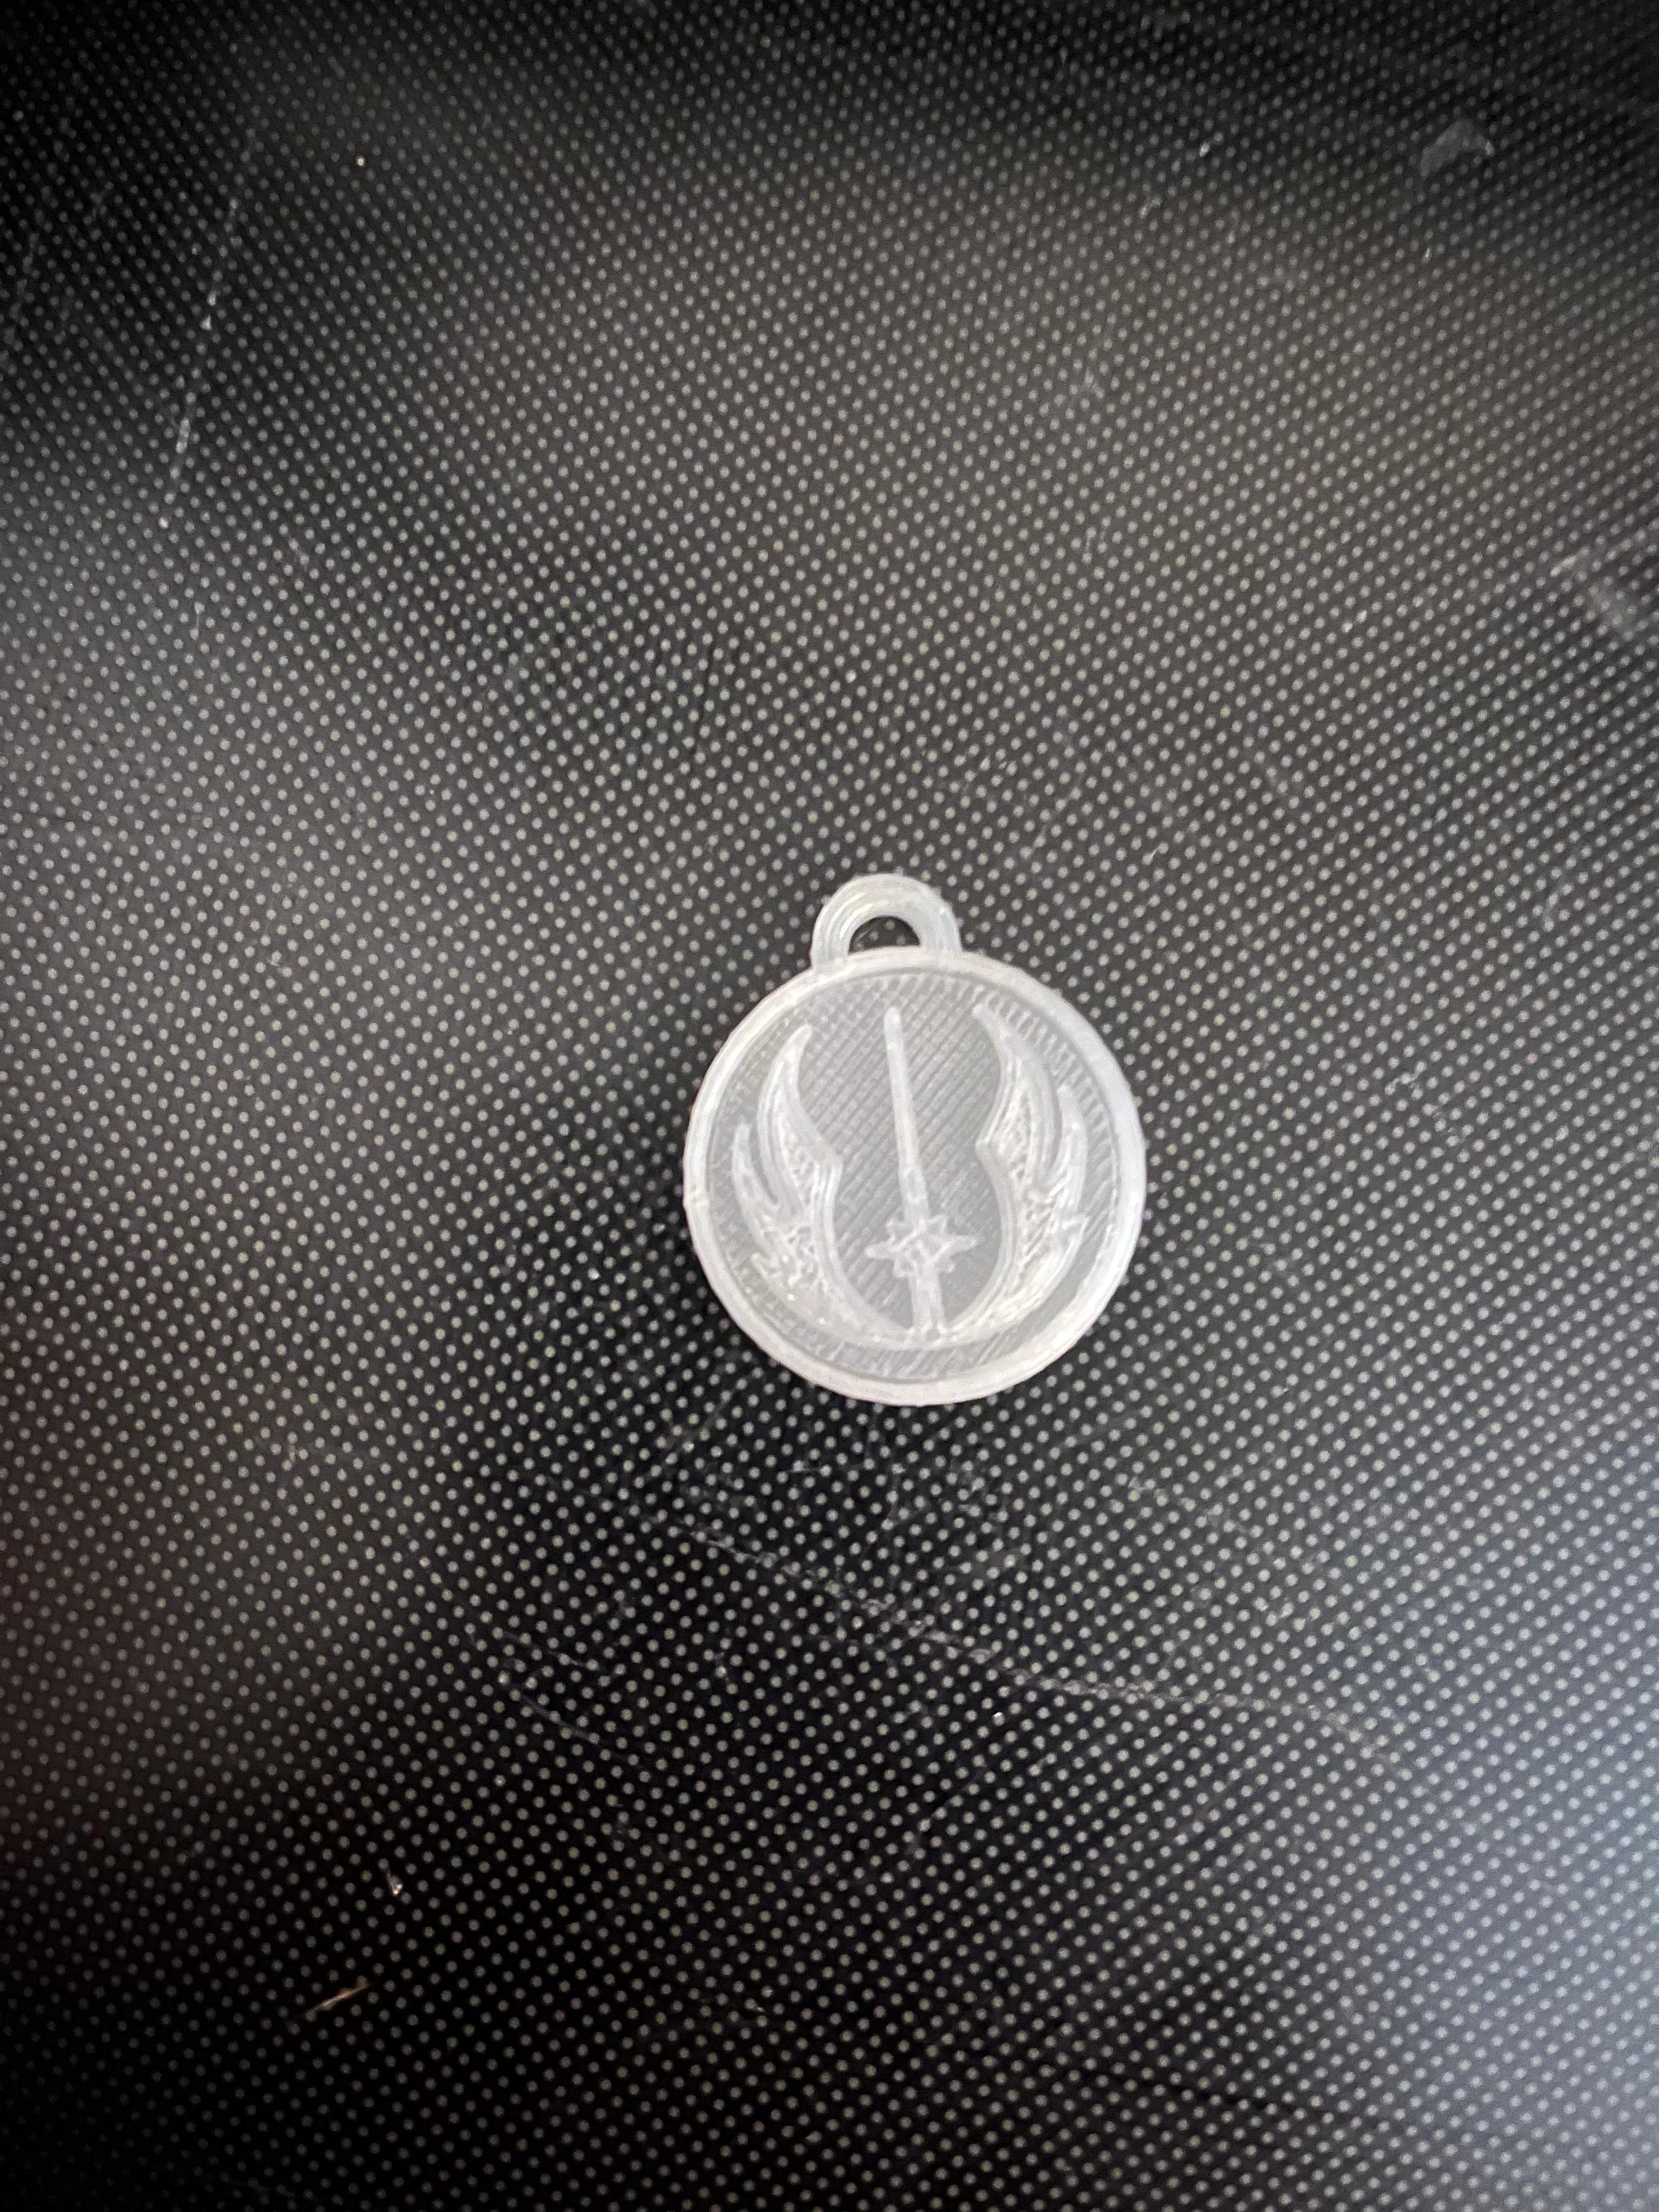 Jedi order symbol keychain/pendant! 3d model